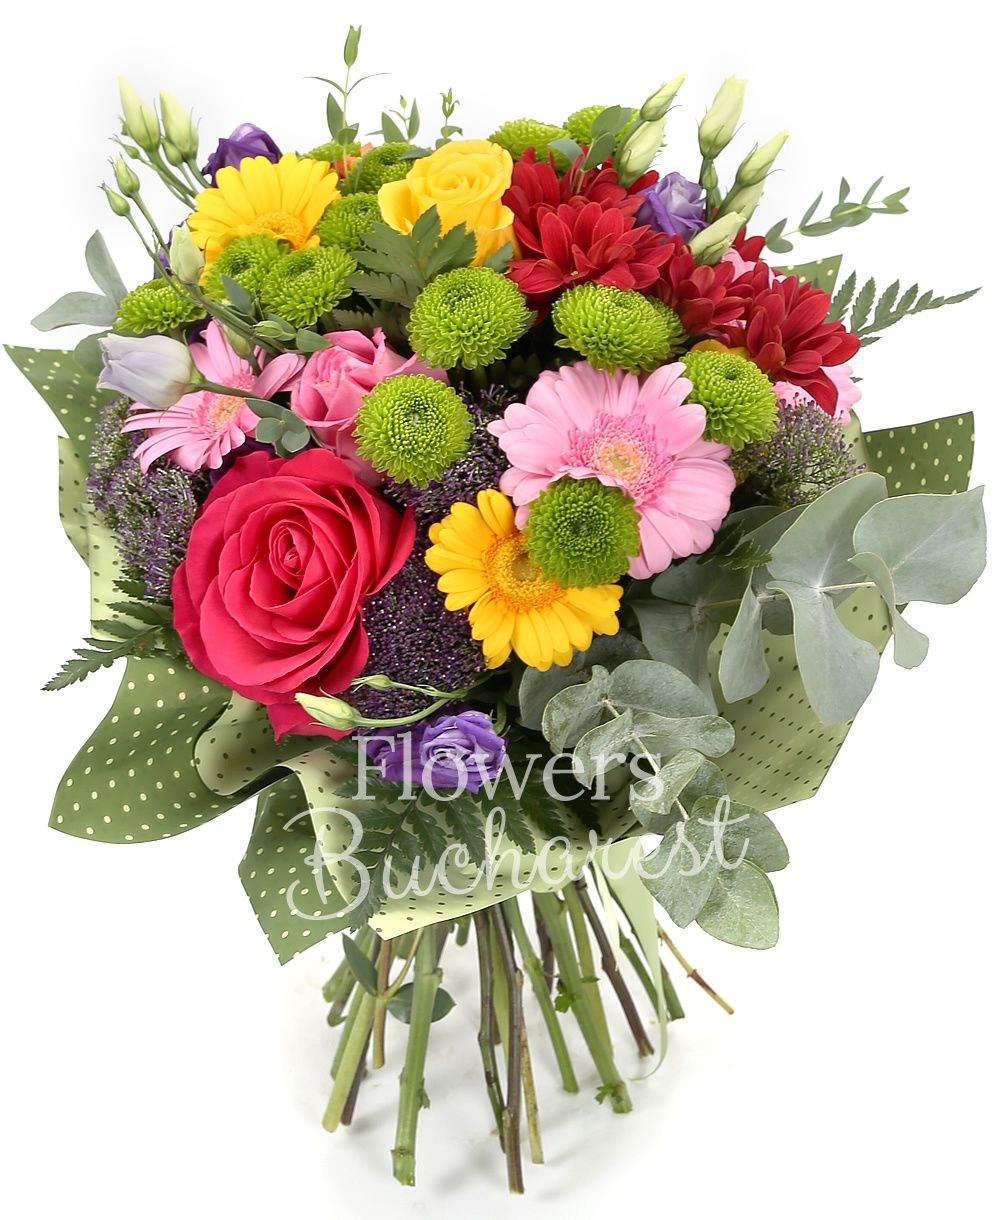 3 multicolored roses, 5 multicolored gerberas, 3 purple lisianthus, 3 purple trachelium, 3 green santini, 1 red chrysanthemum, greenery